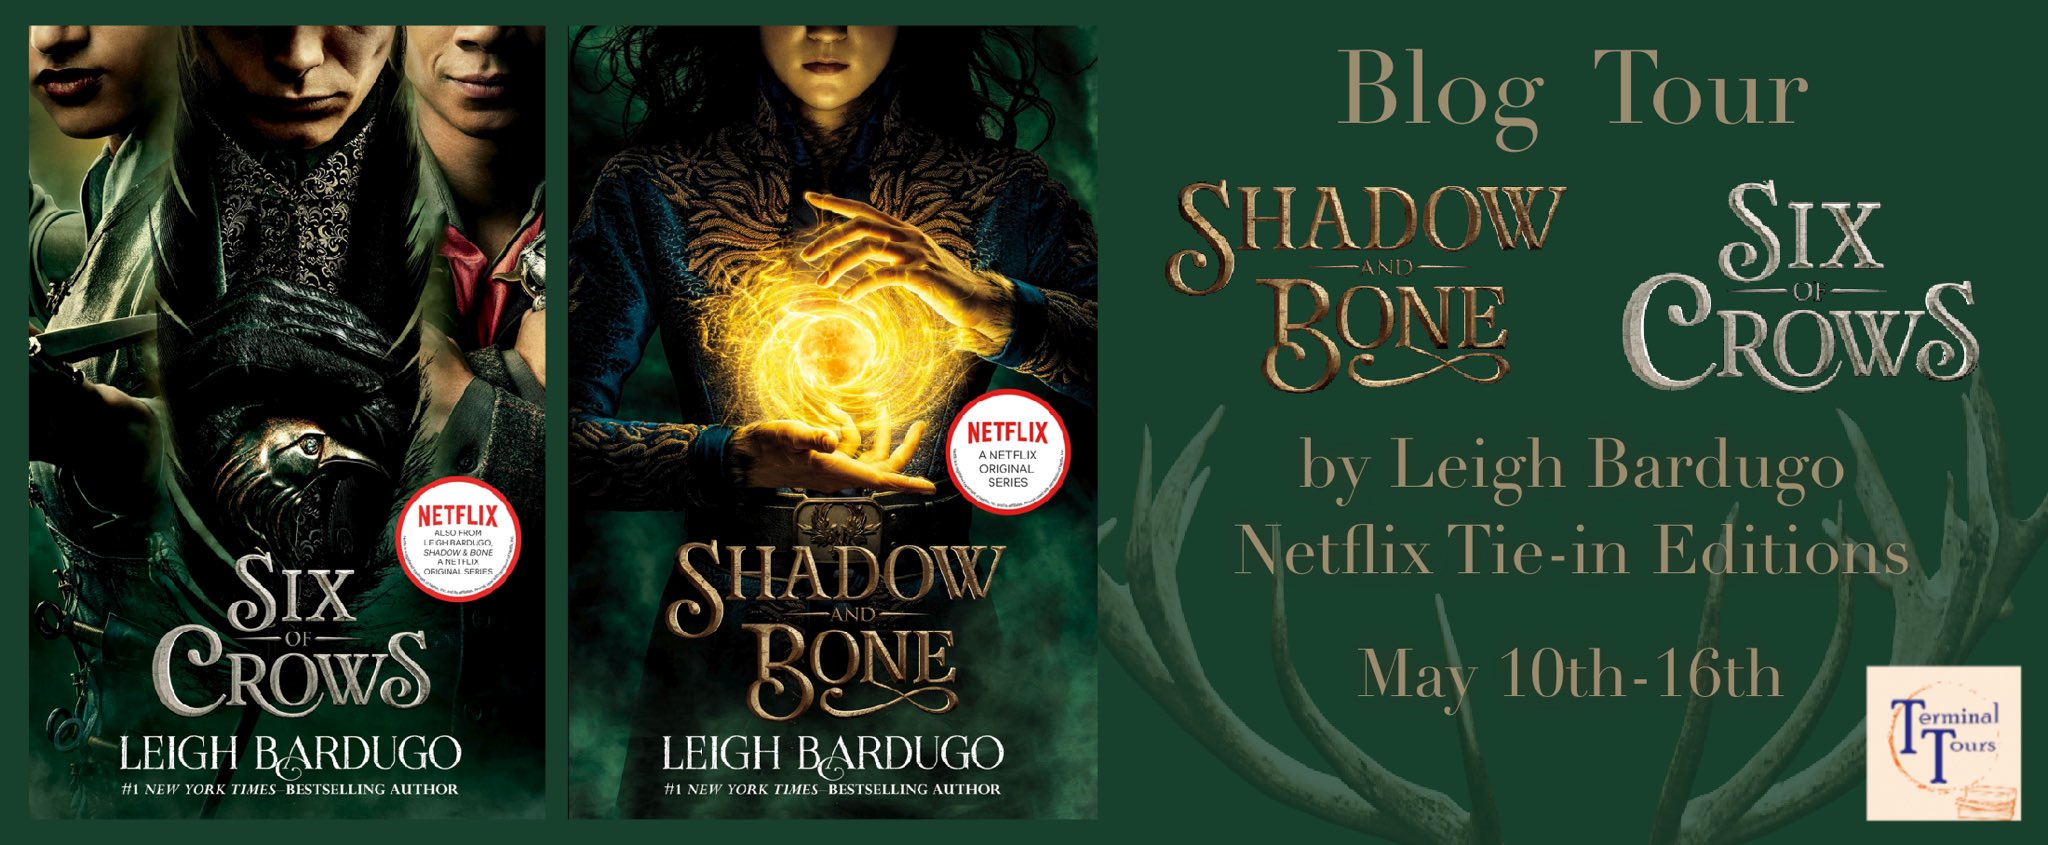 Lauren's Boookshelf: Blog Tour: Shadow and Bone & Six of Crows